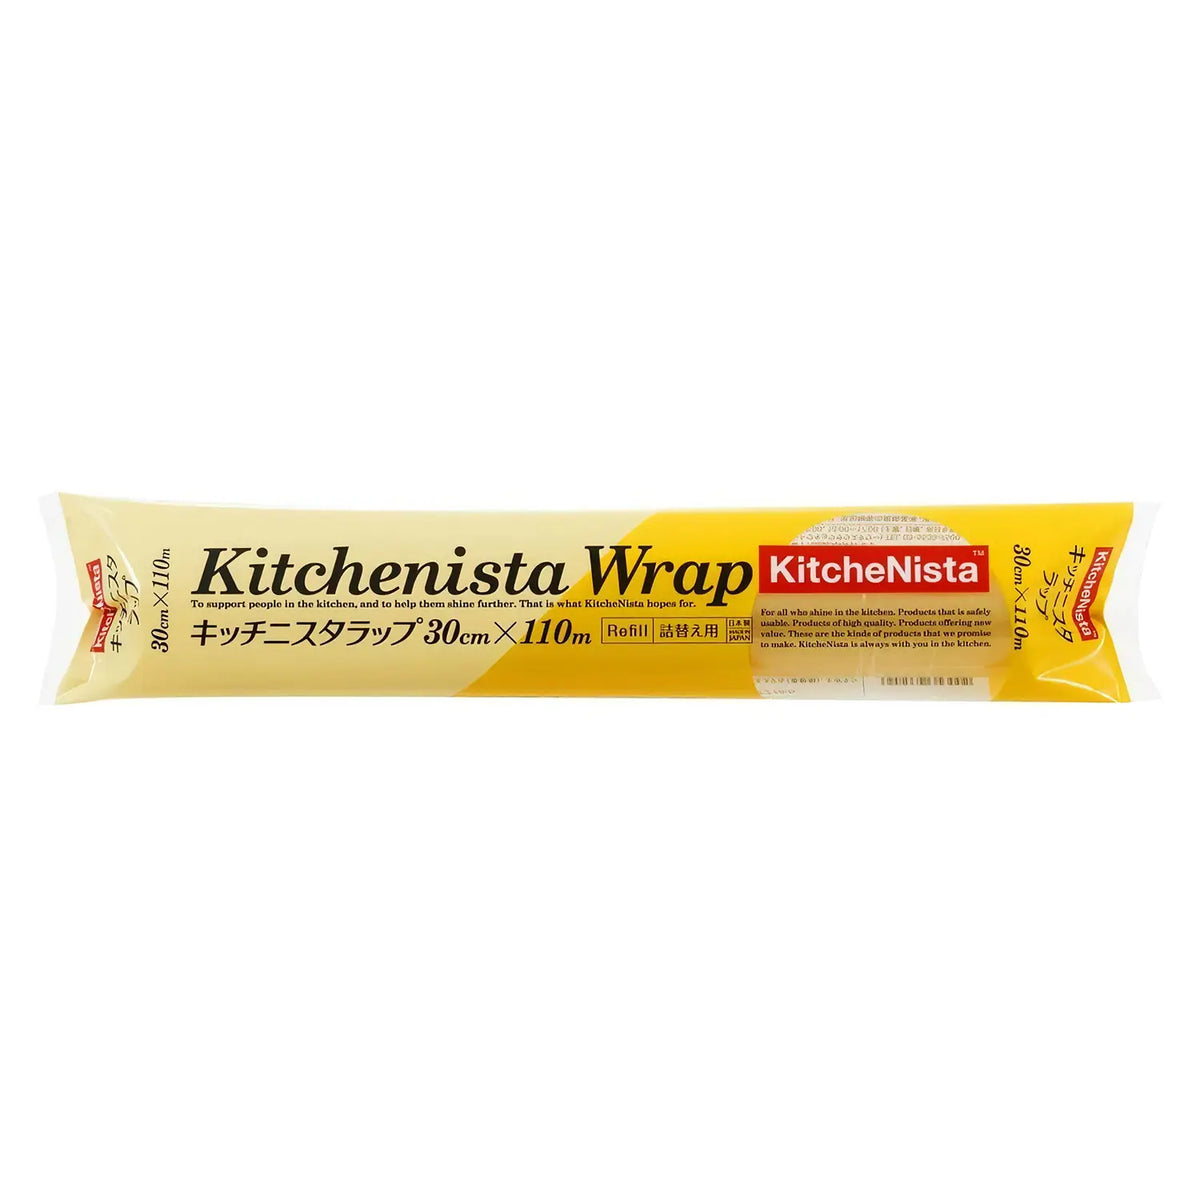 Kitchenista Plastic Wrap Refill